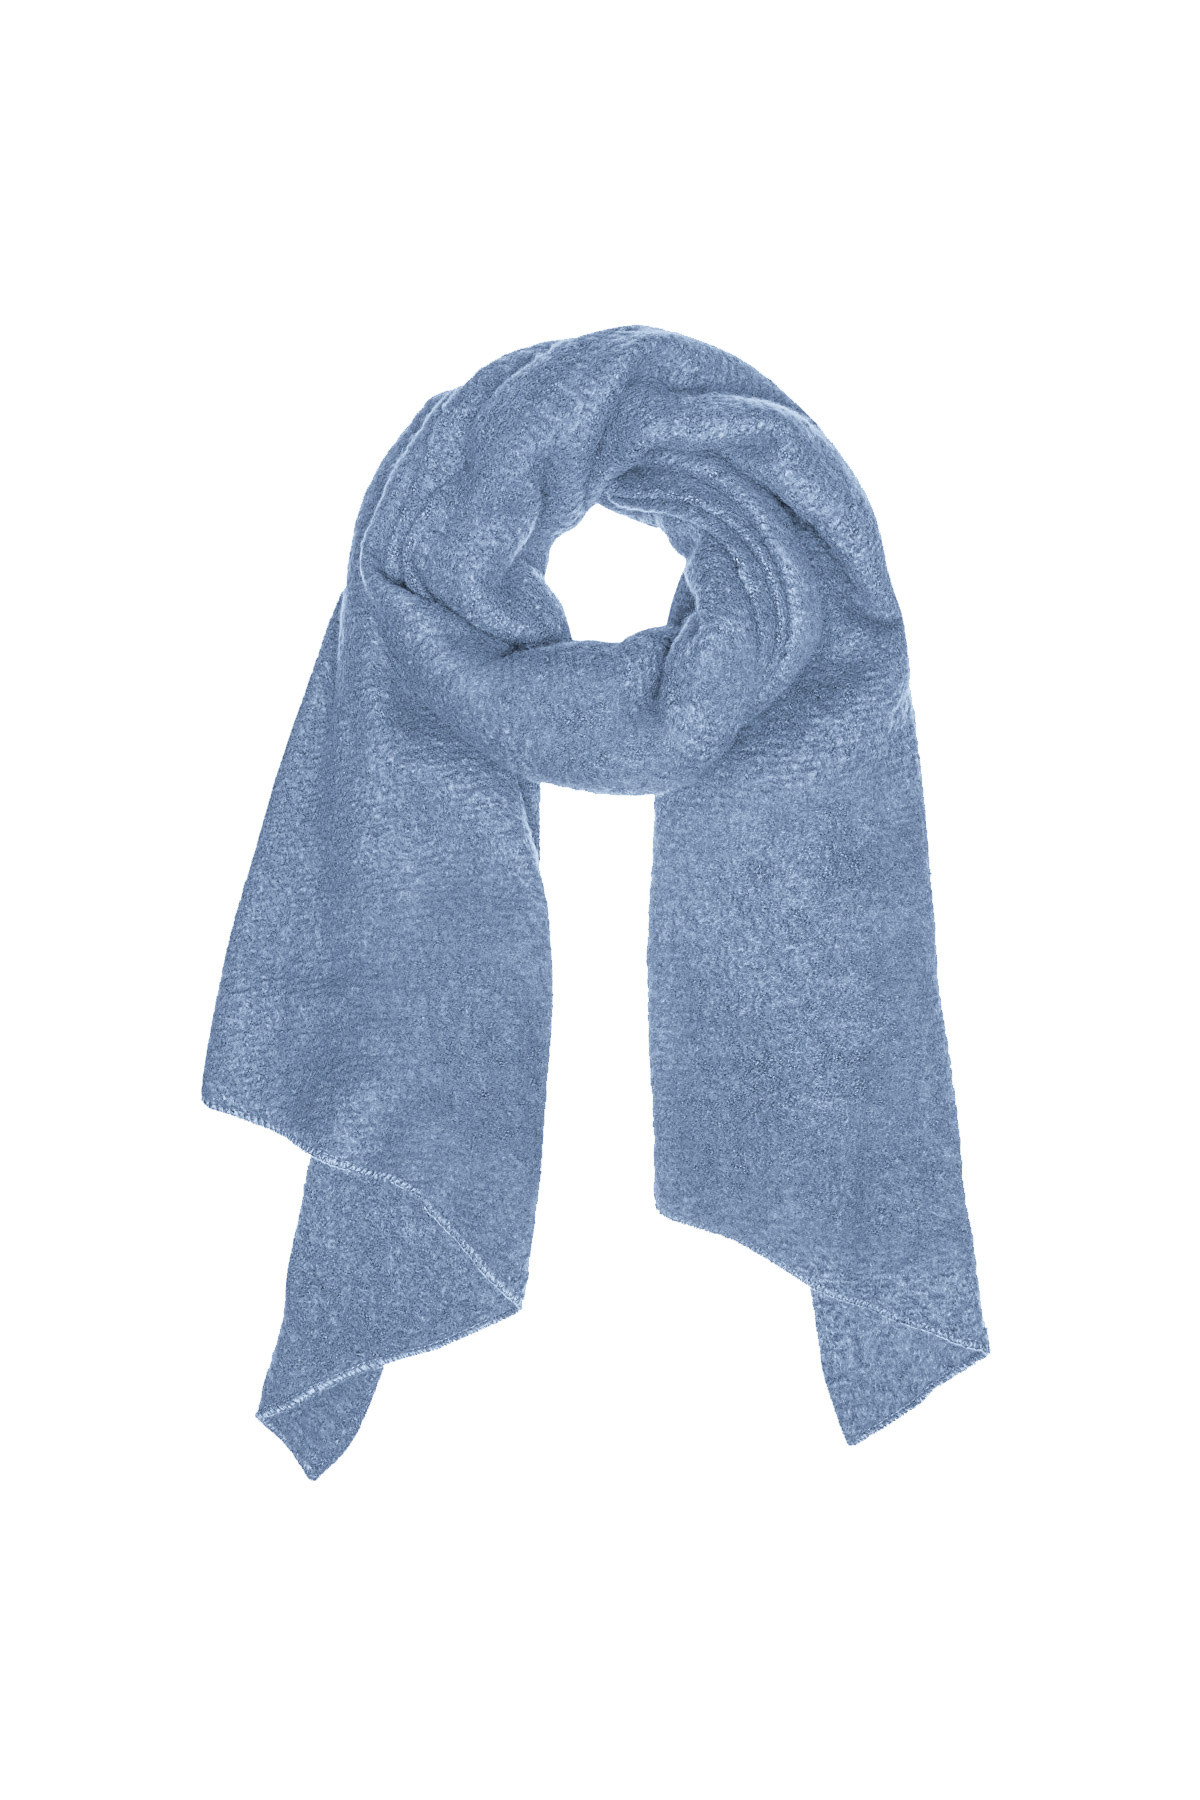 Soft winter scarf ocean blue Polyester 